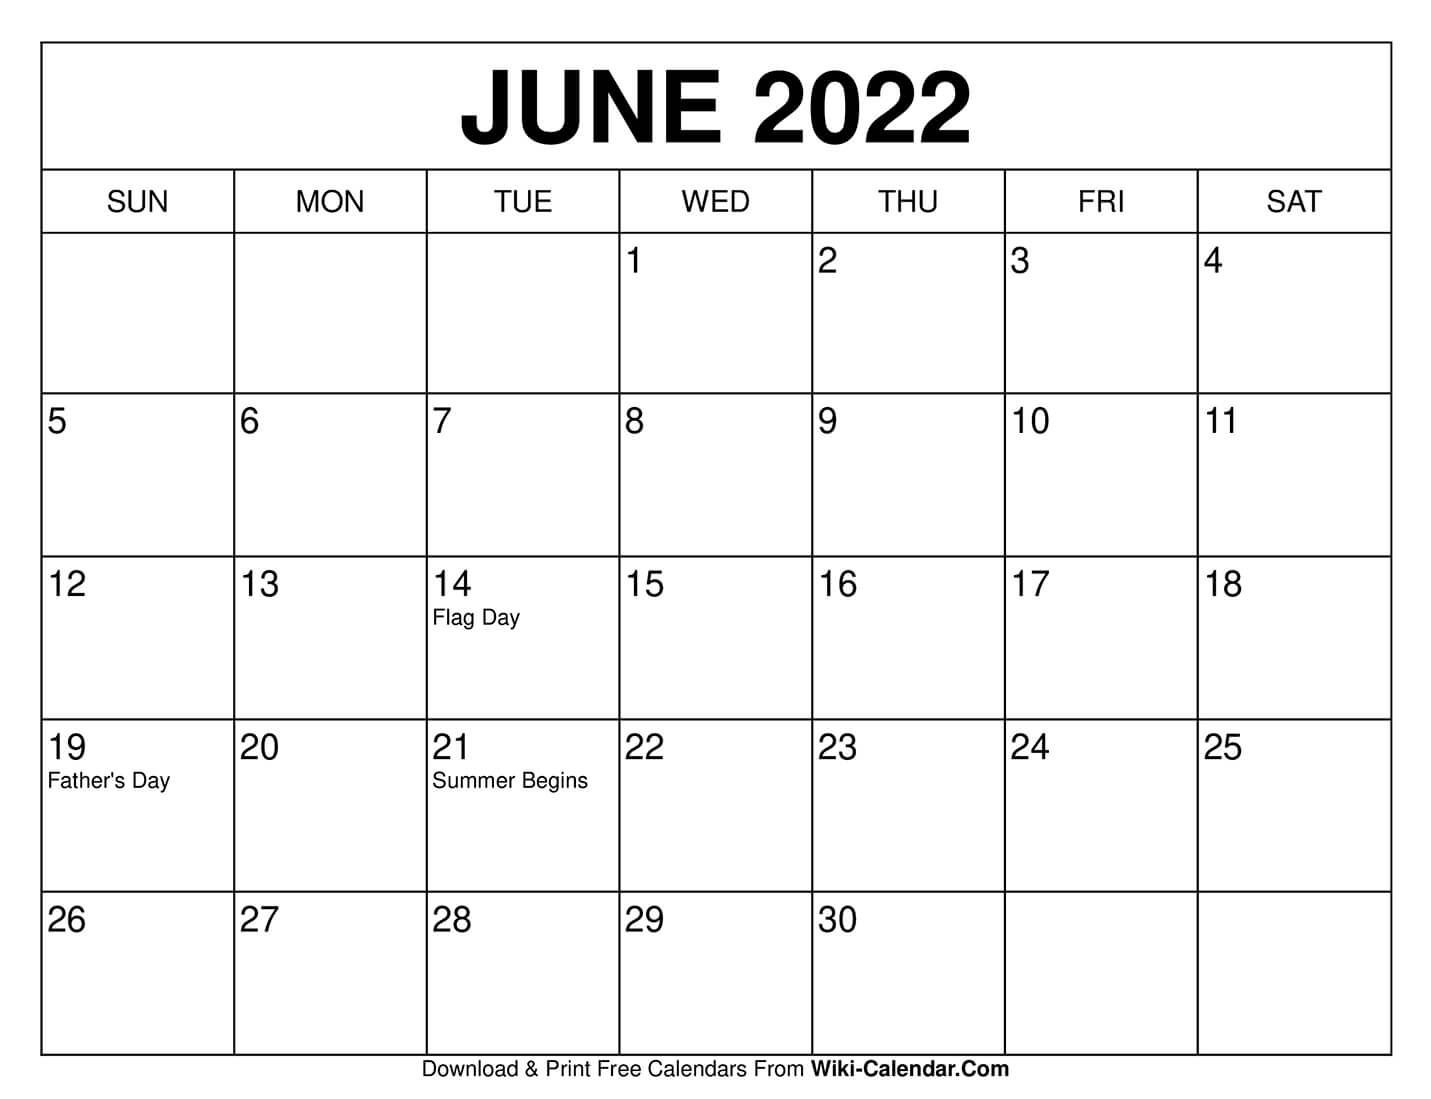 June 2022 Calendar In 2020 | Calendar Template, Calendar  Perpetual Monthly Planner June